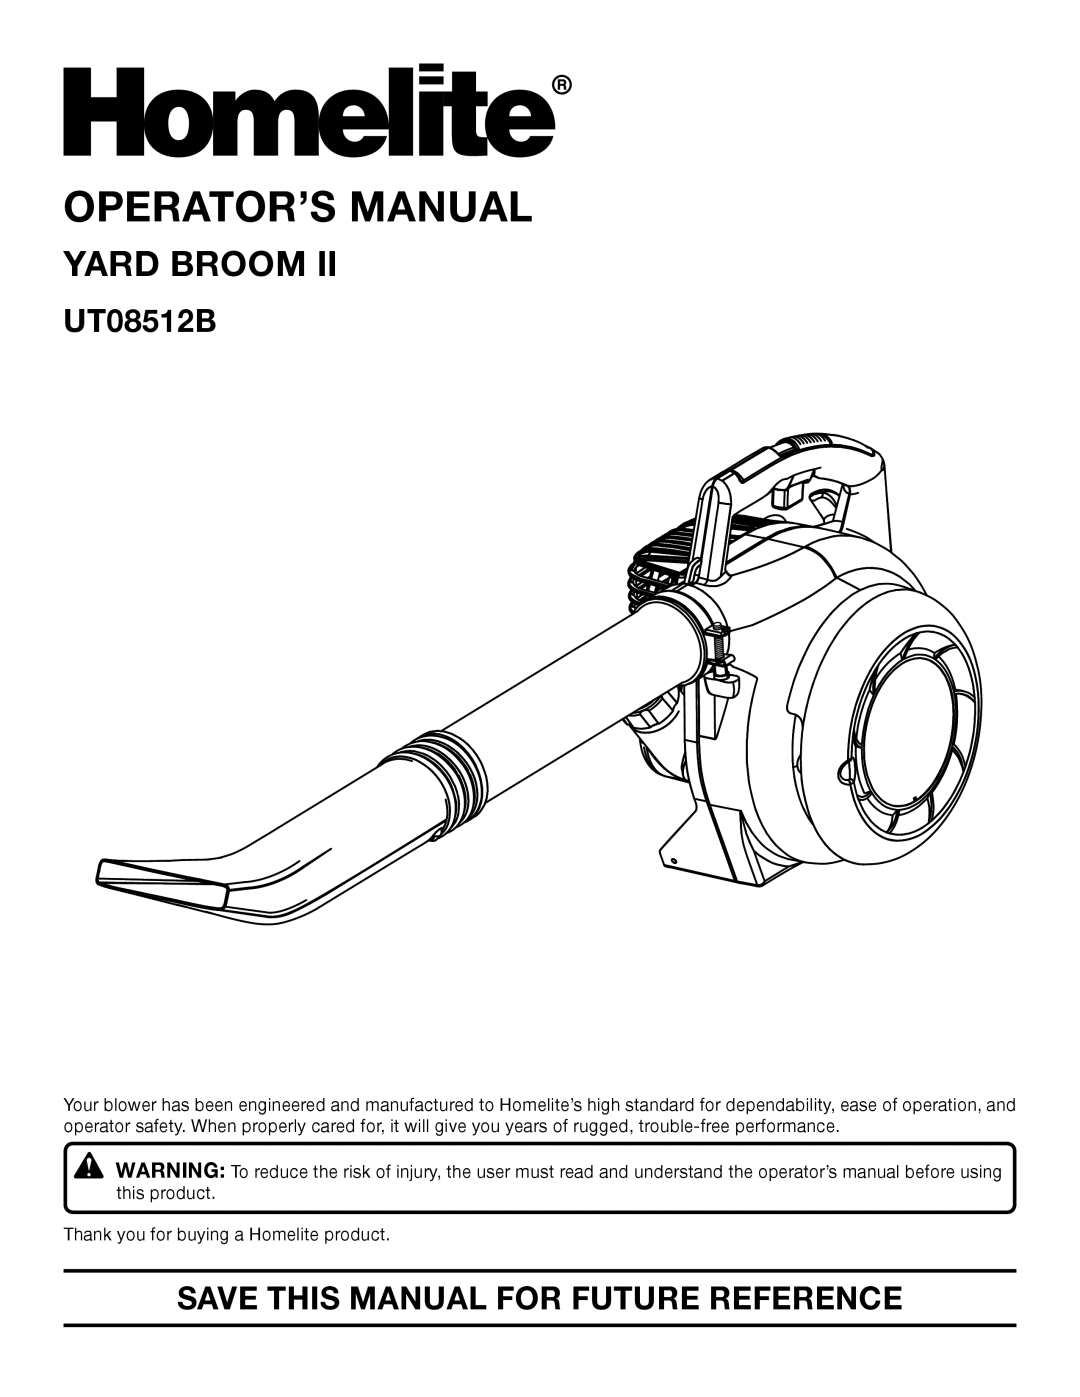 Homelite UT08512B manual Operator’S Manual, Yard Broom, Save This Manual For Future Reference 